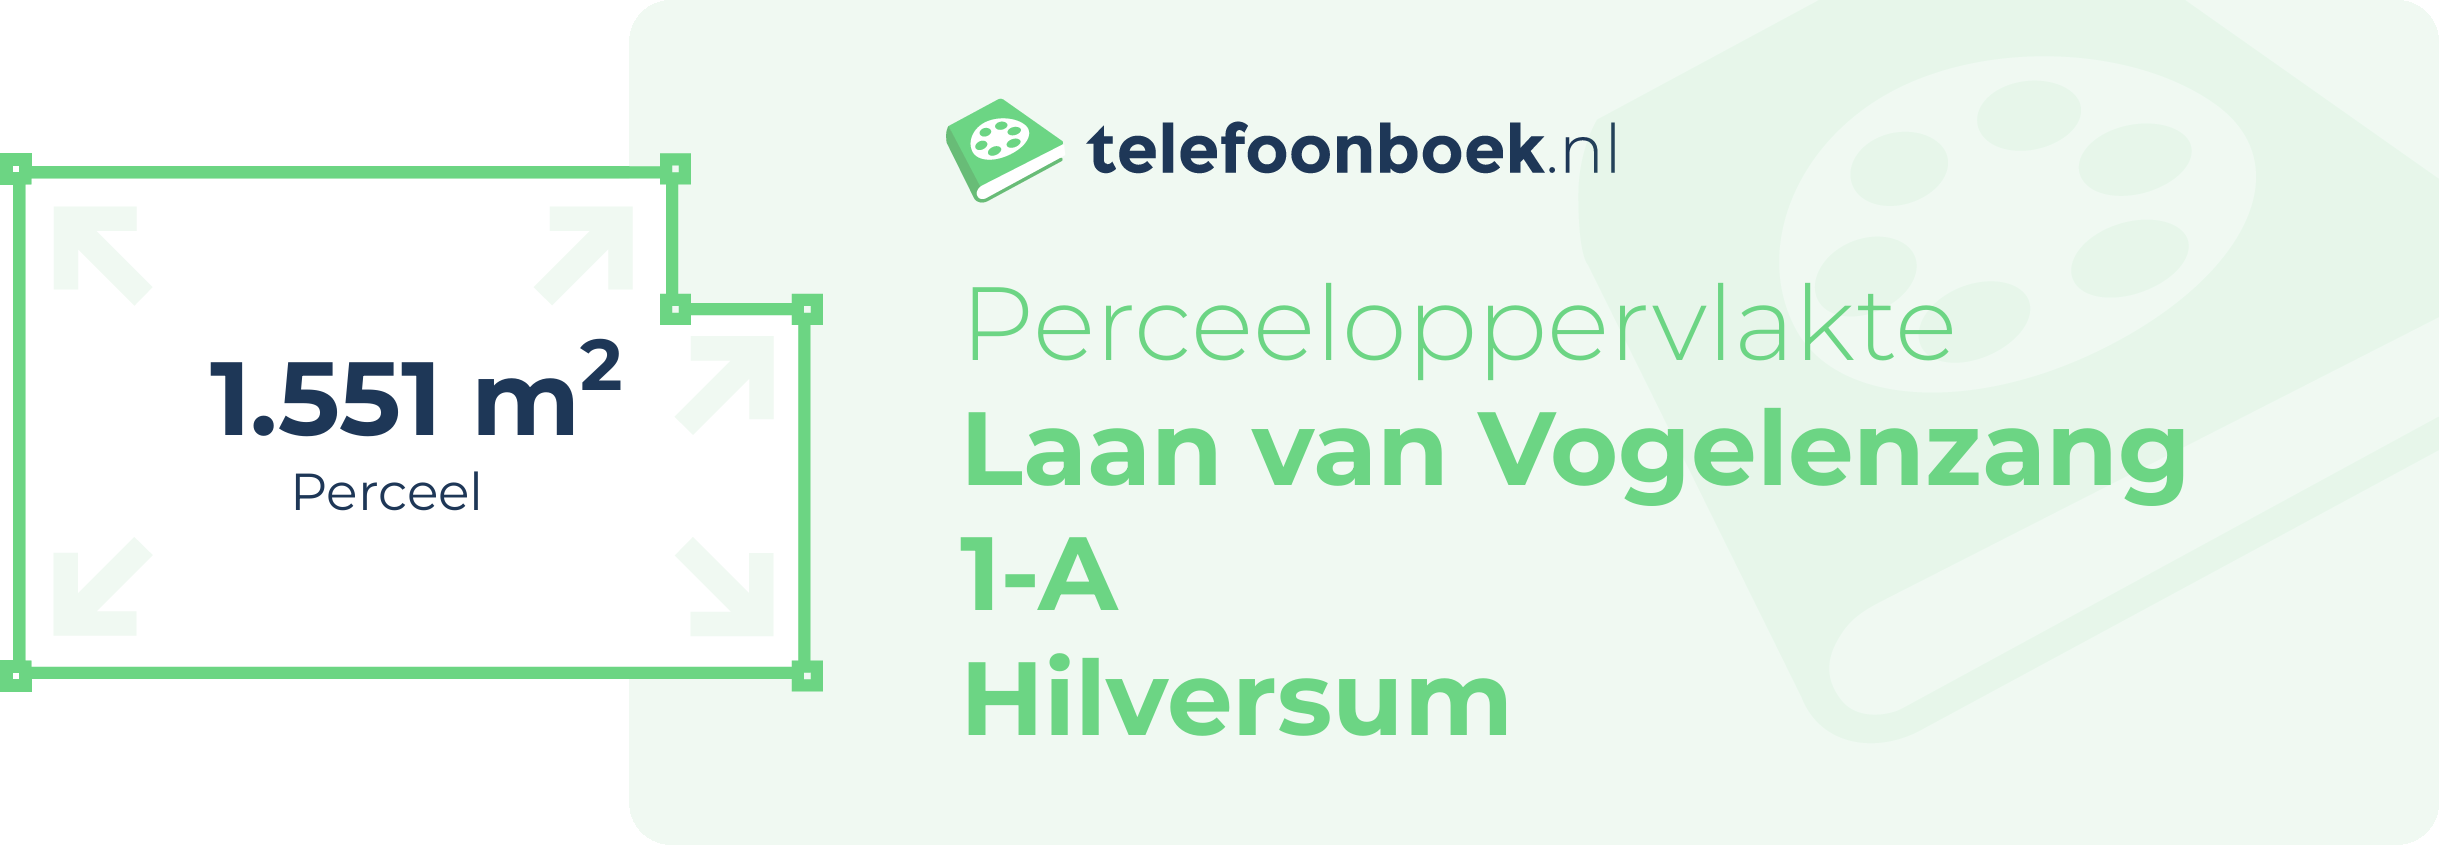 Perceeloppervlakte Laan Van Vogelenzang 1-A Hilversum